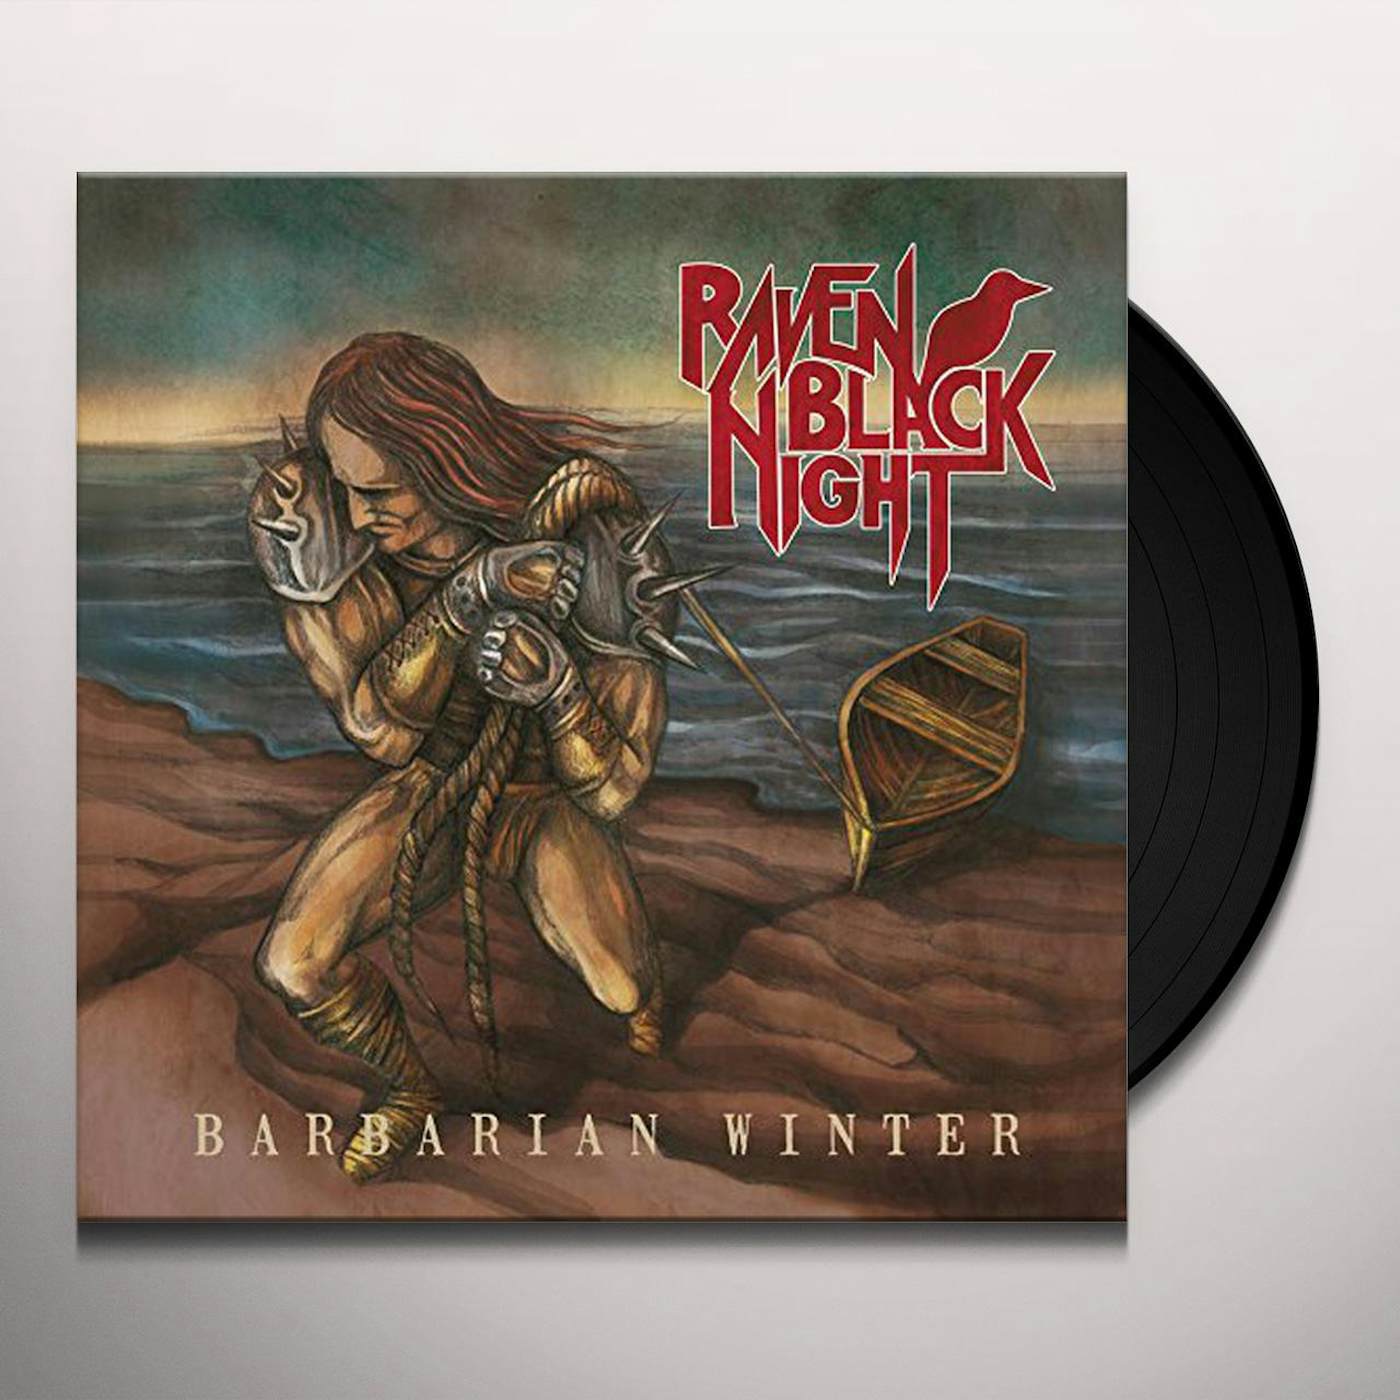 Raven Black Night Barbarian Winter Vinyl Record